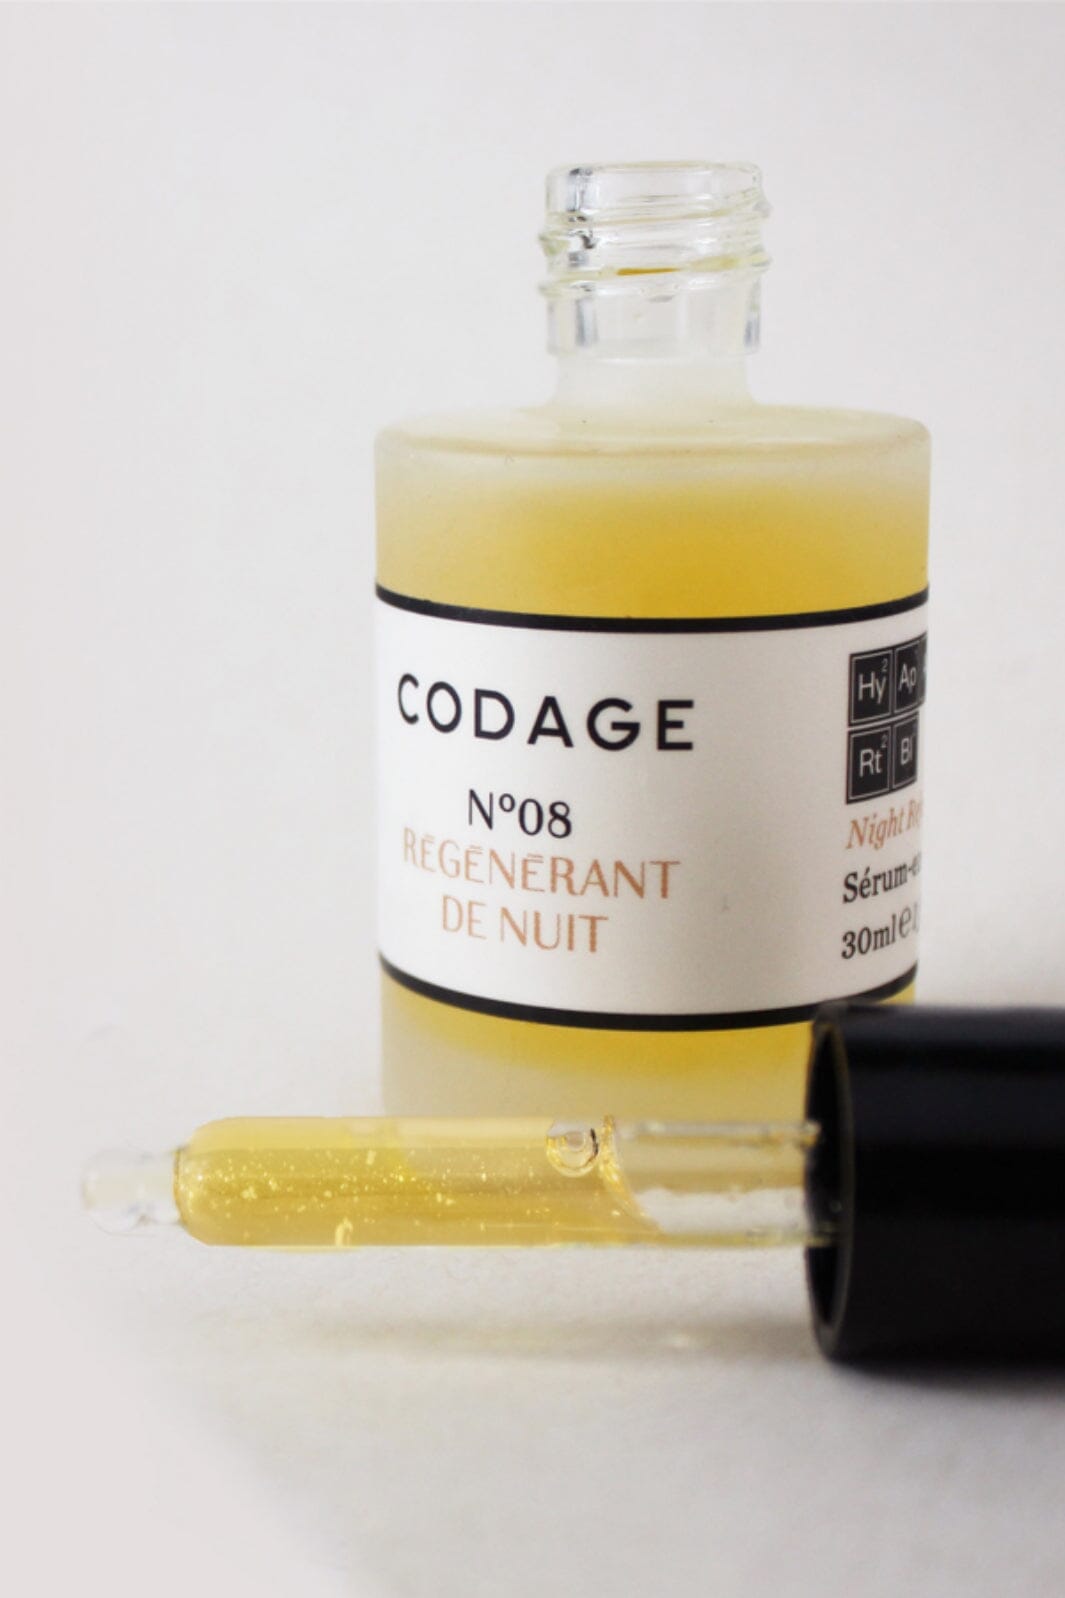 Codage - Serum No. 8 Night Rejuvenation Serum 